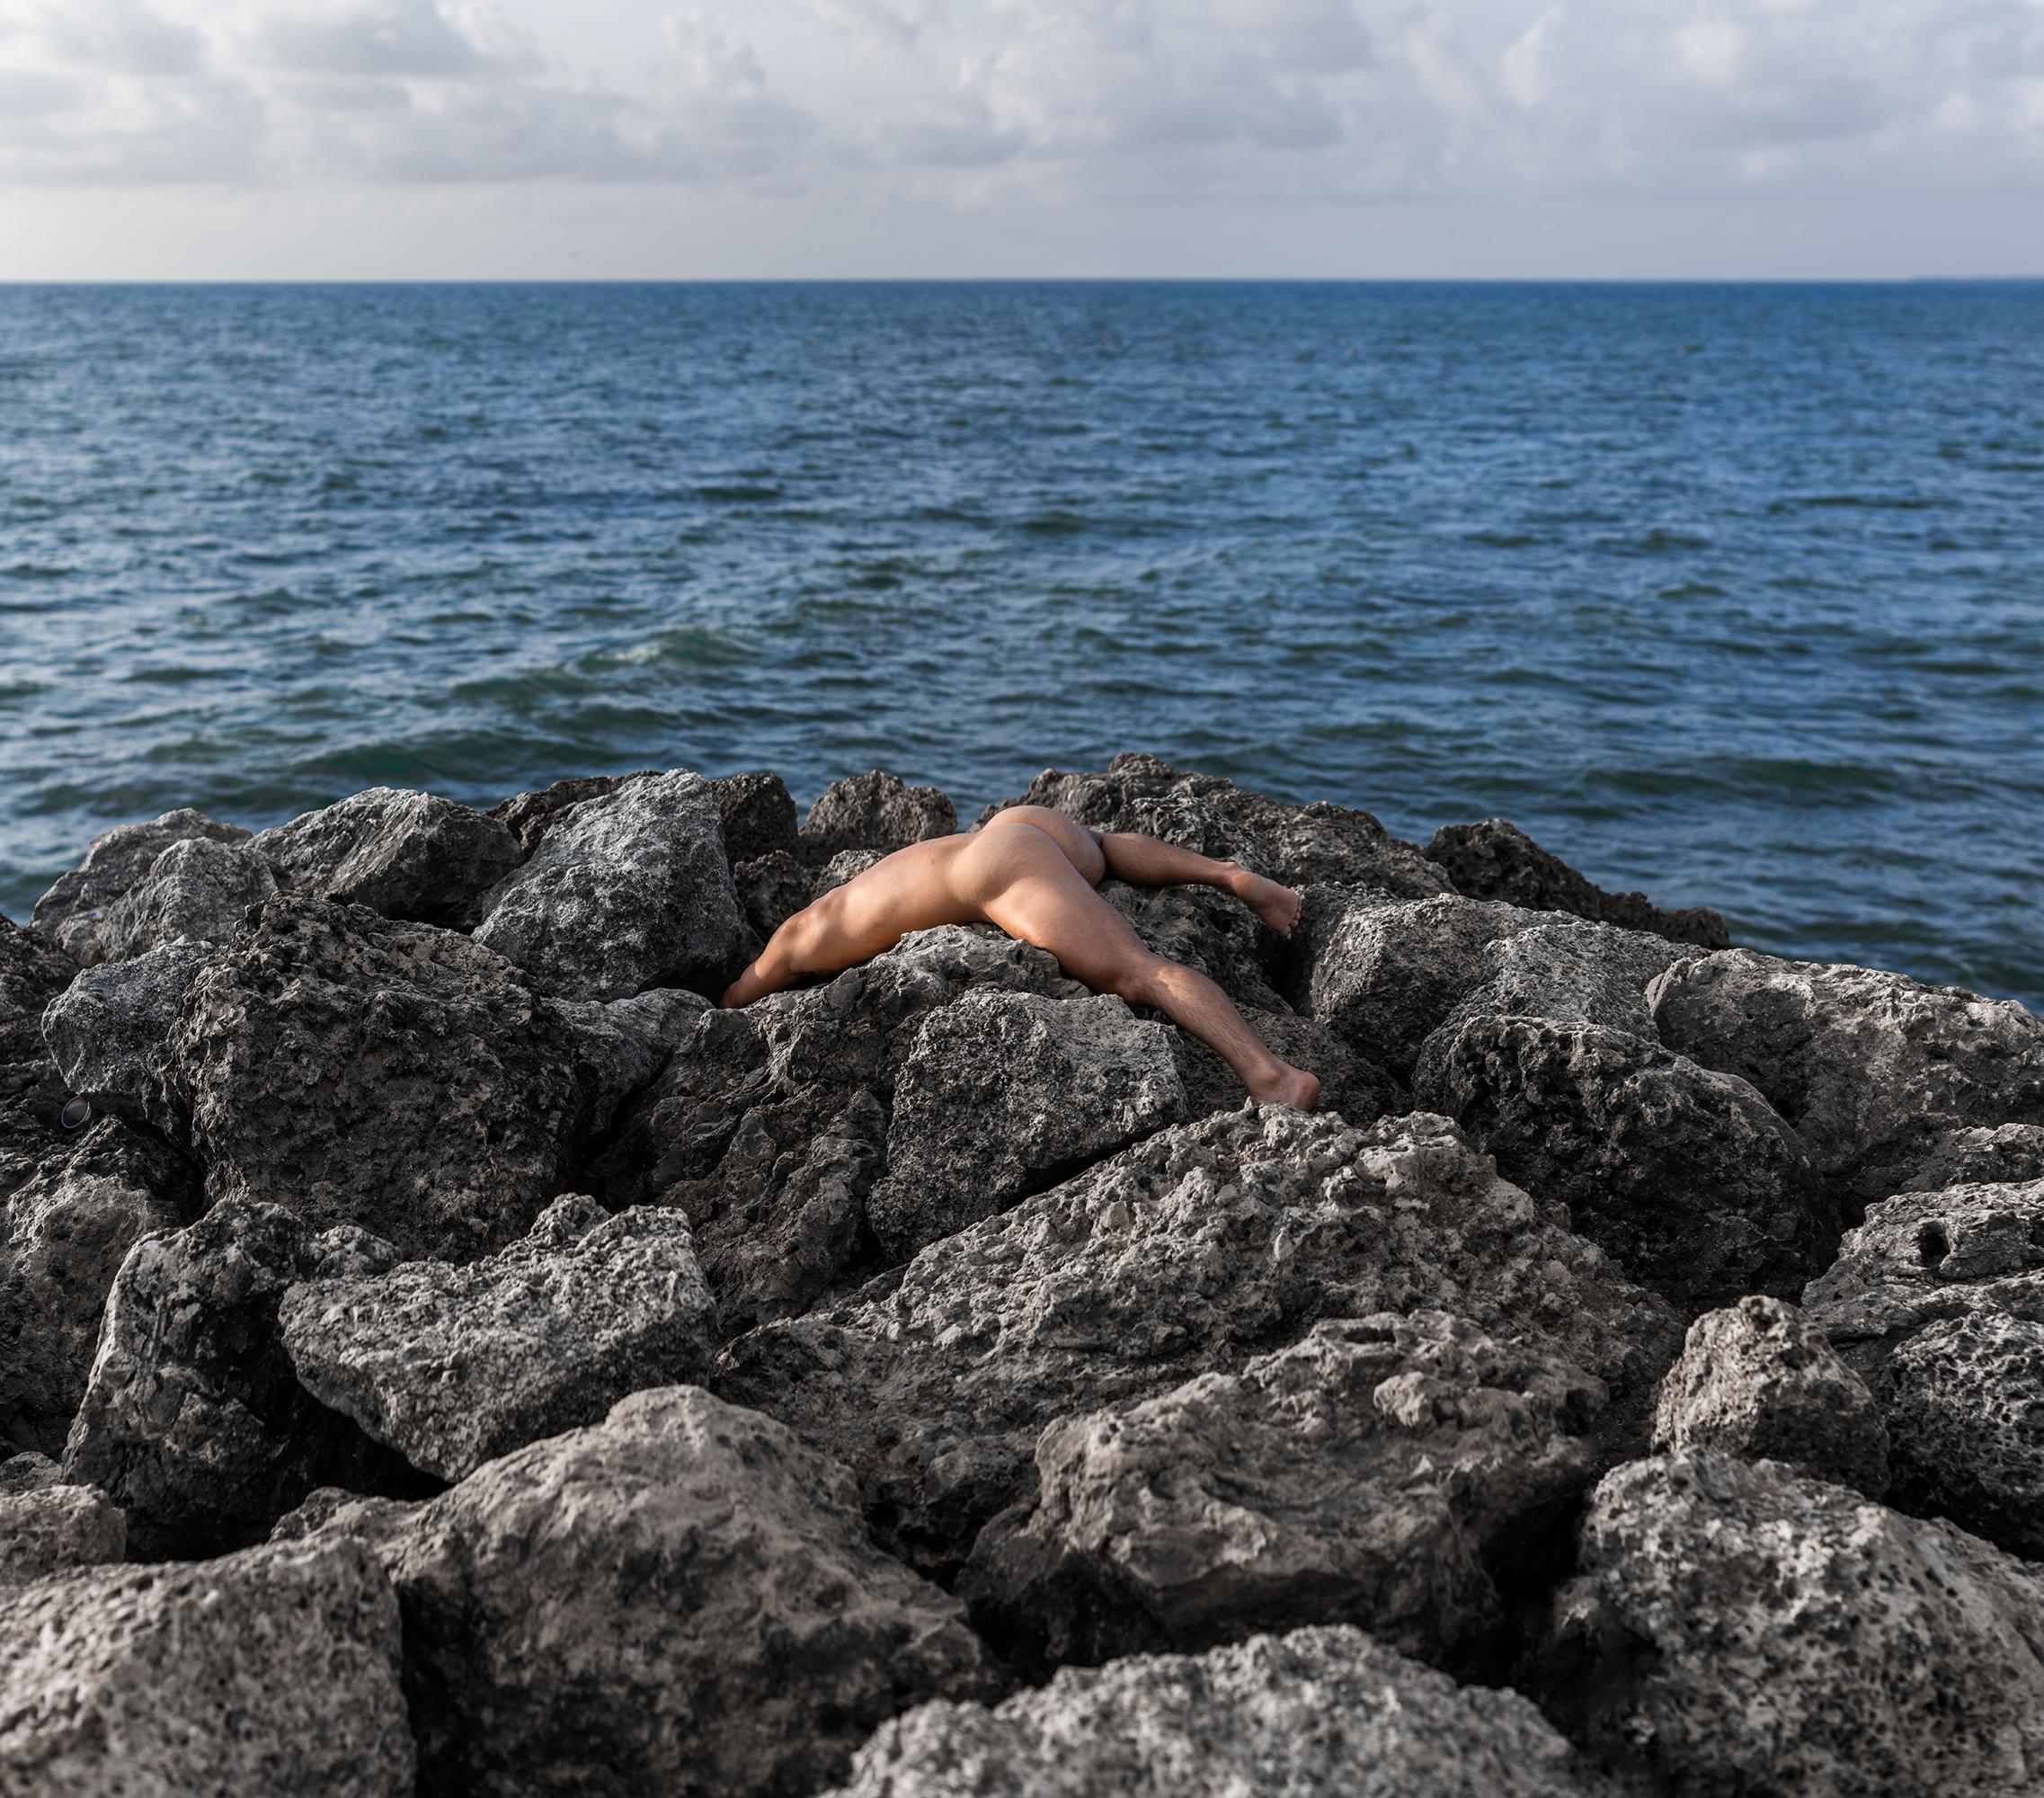 Javier Rey Nude Photograph - Engulfment - Cartagena 1. From the series Engulfment. Color Nude photograph